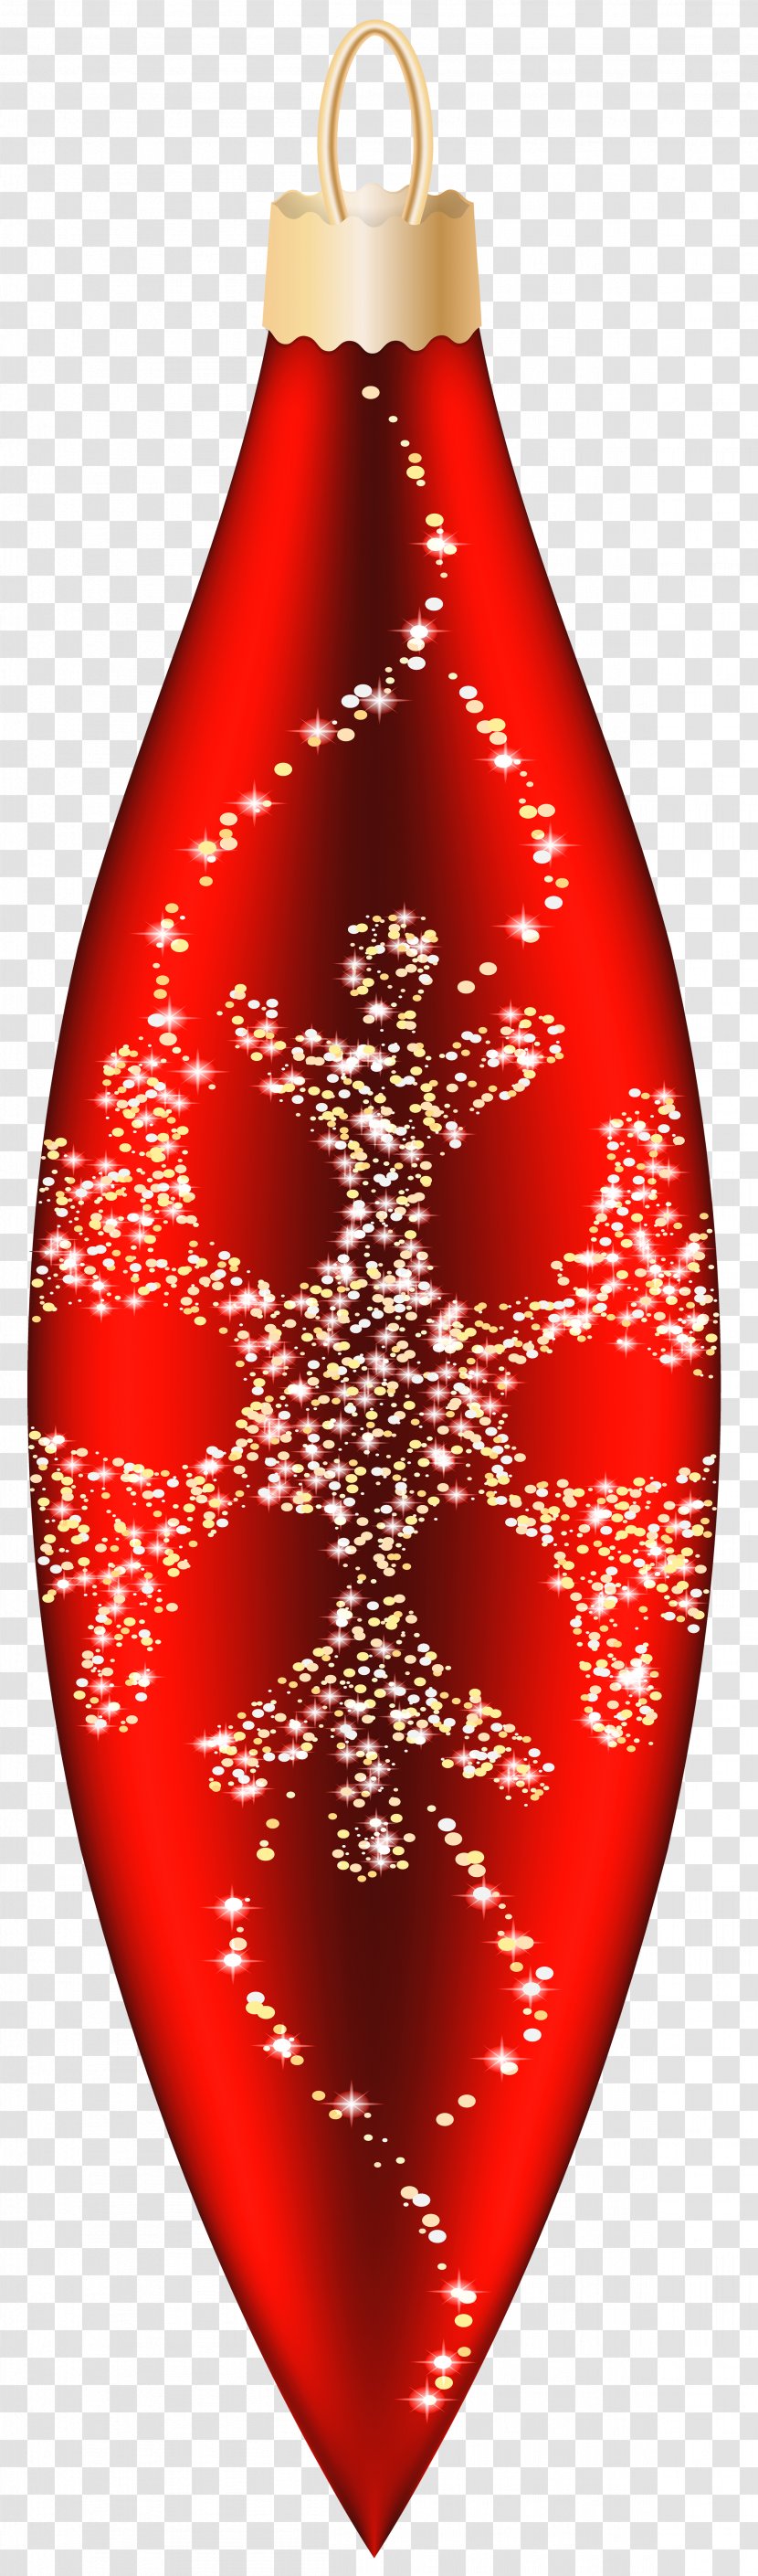 Christmas Ornament Day Image Santa Claus Clip Art - Footwear Transparent PNG